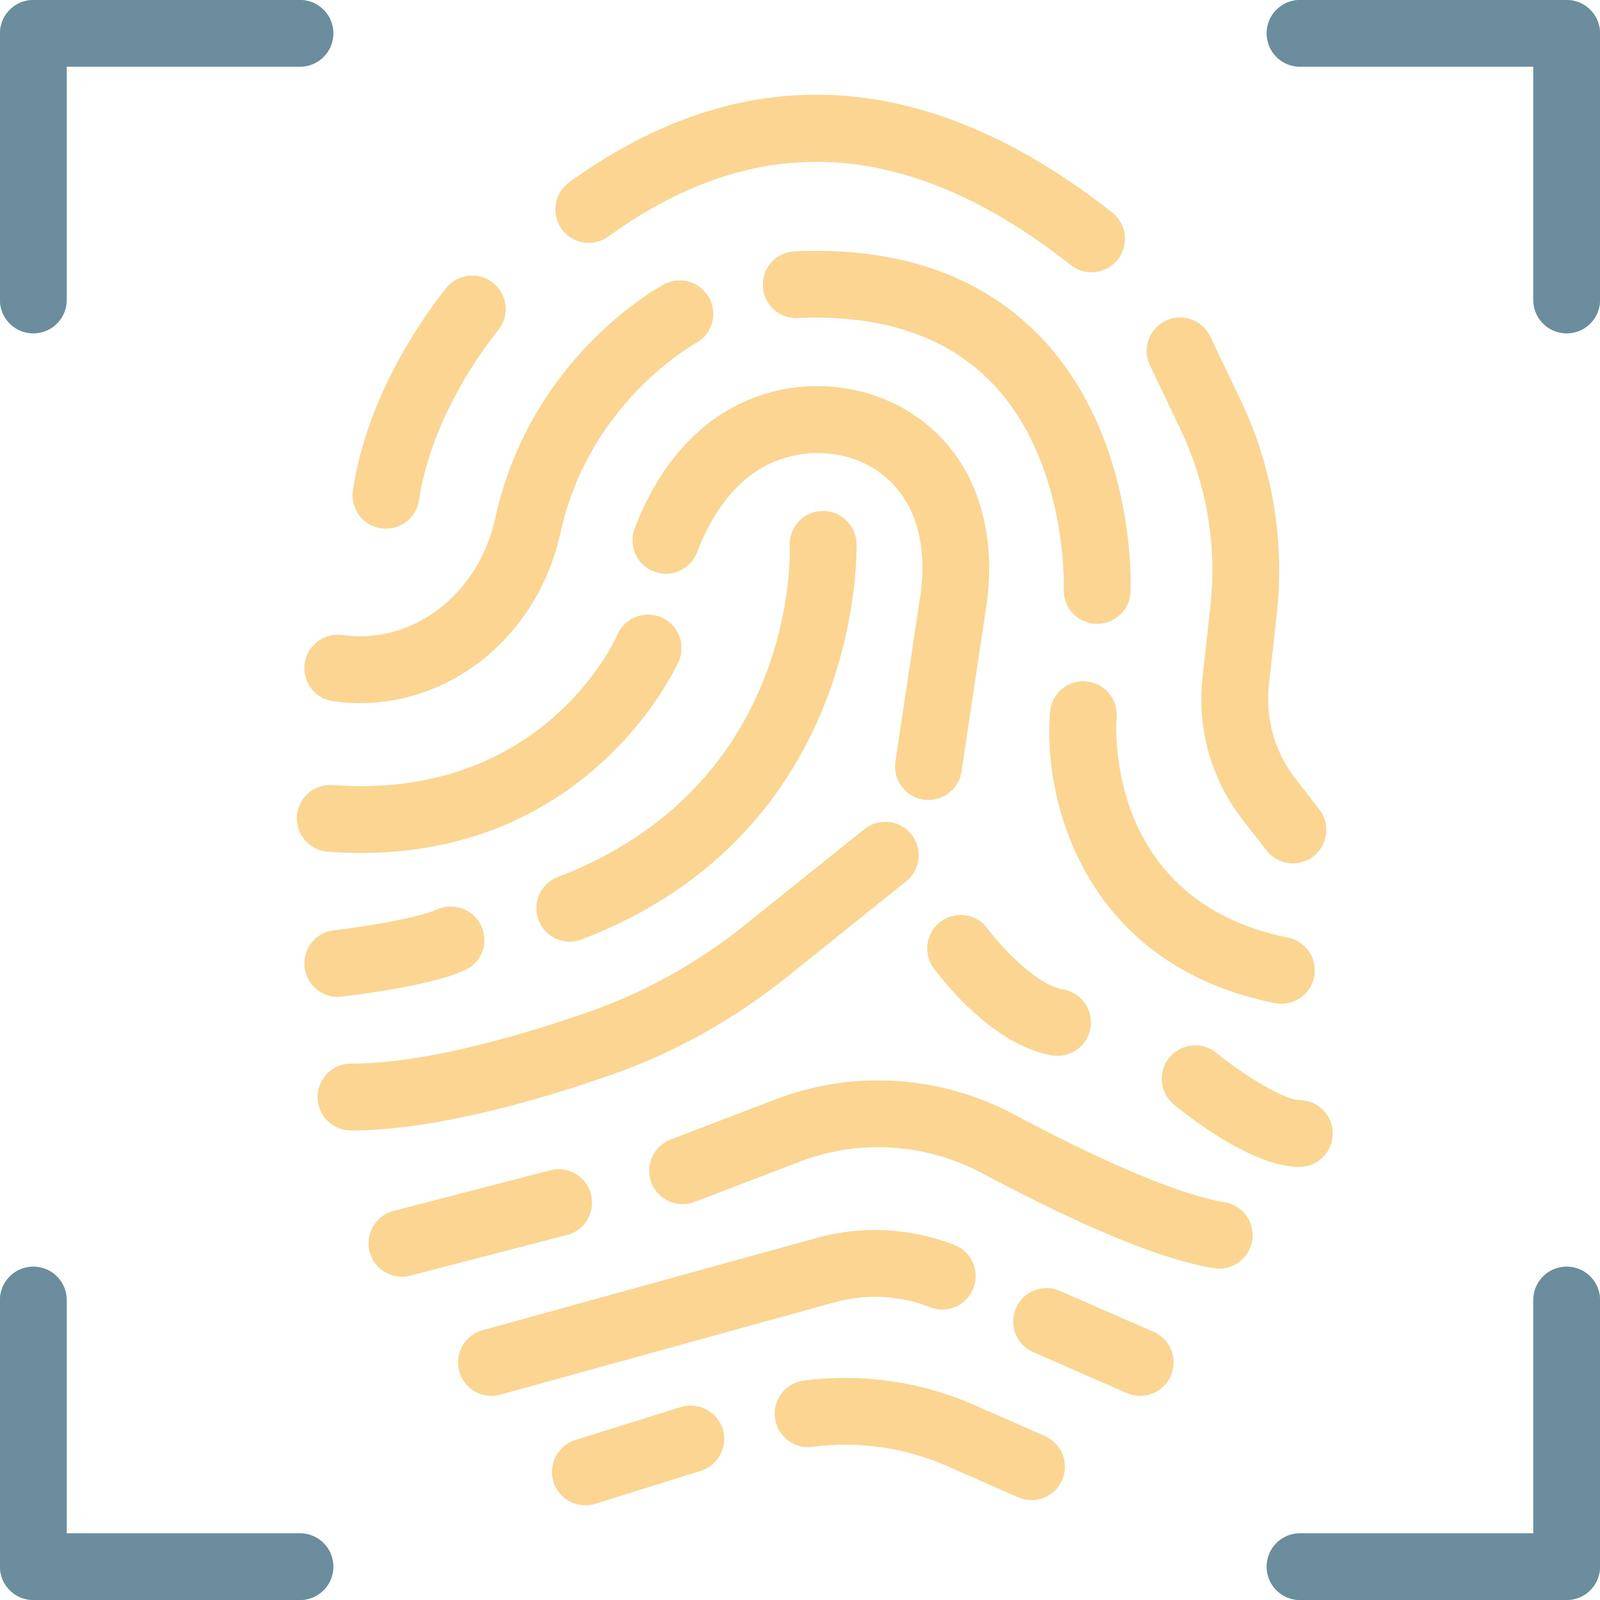 fingerprint Vector illustration on a transparent background. Premium quality symmbols. Line Color vector icons for concept and graphic design.